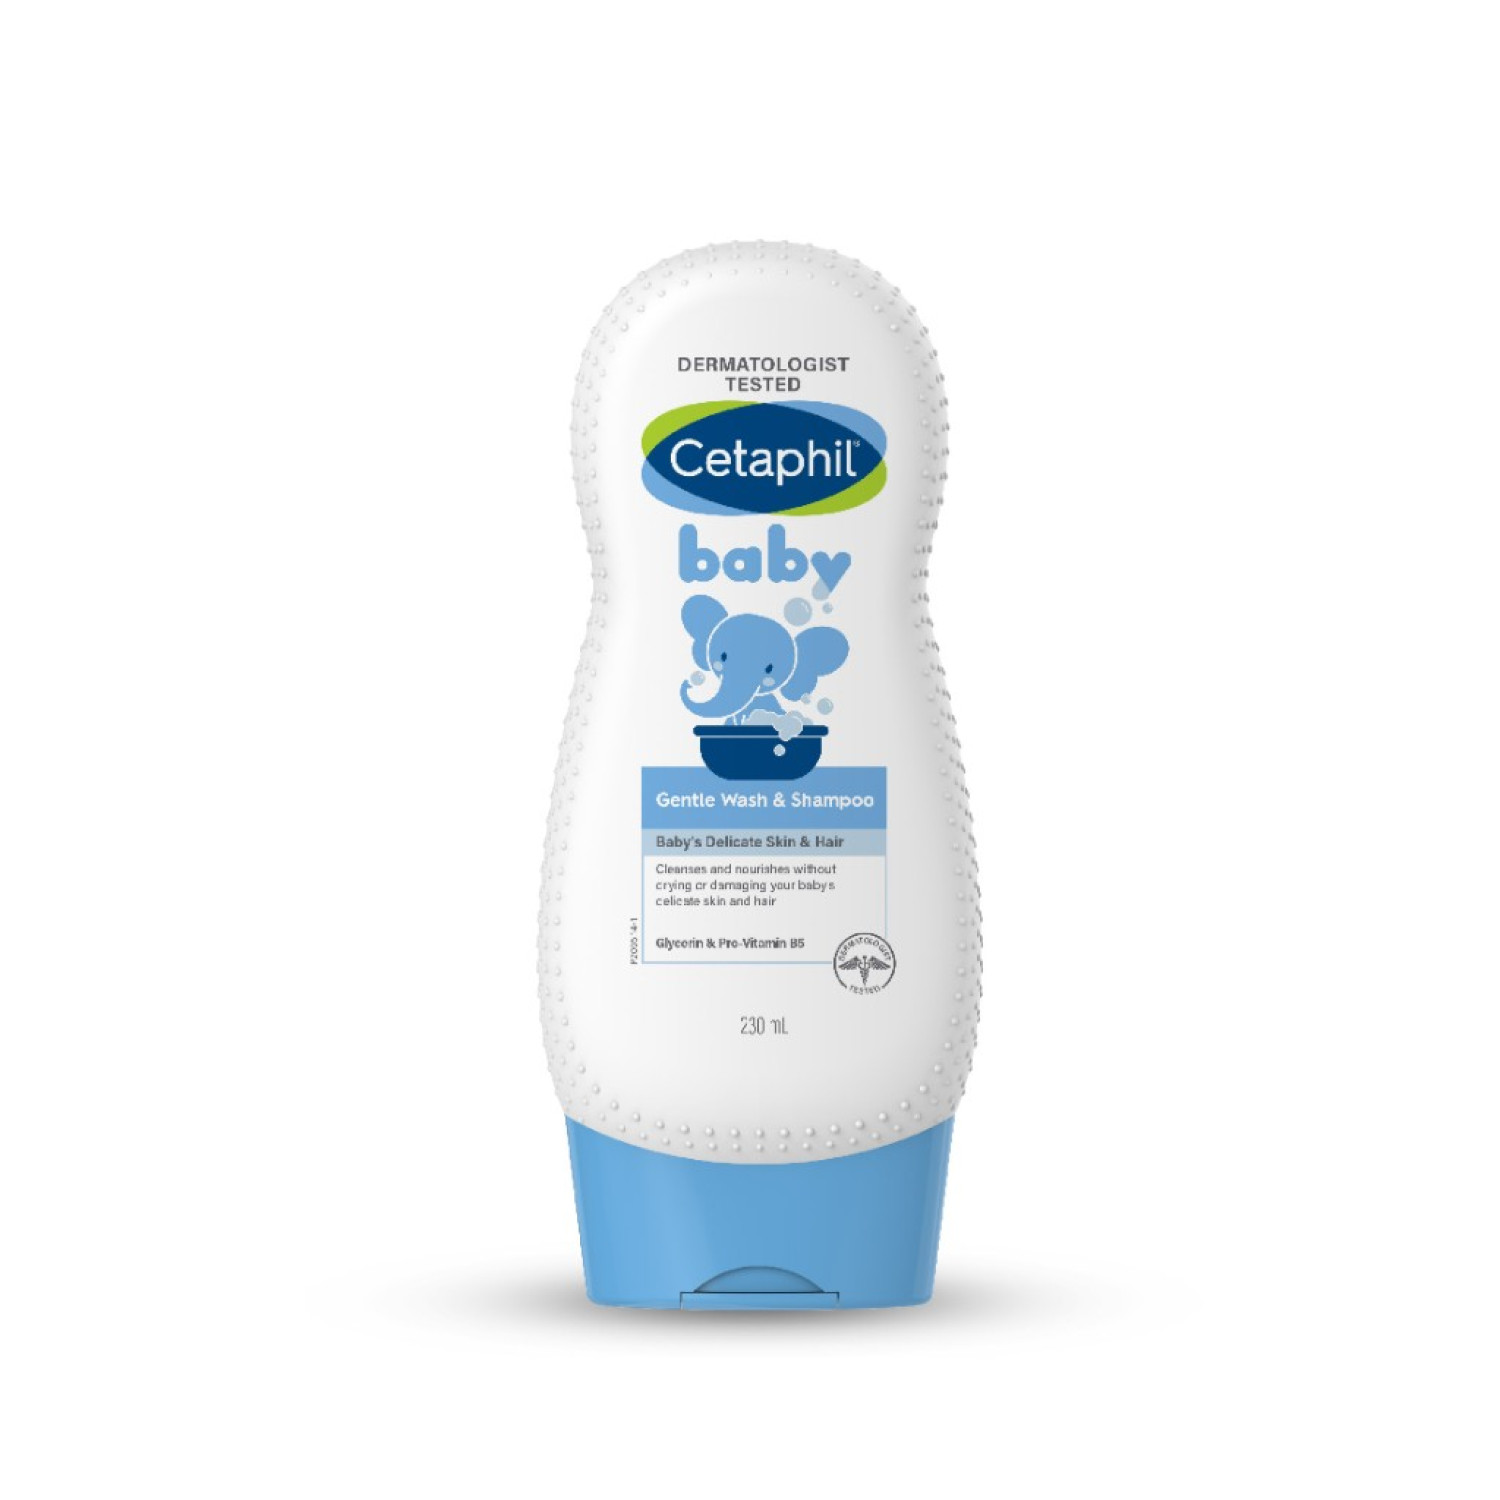 cetaphil-baby-gentle-wash-shampoo-230-ml-660133f980042.jpeg